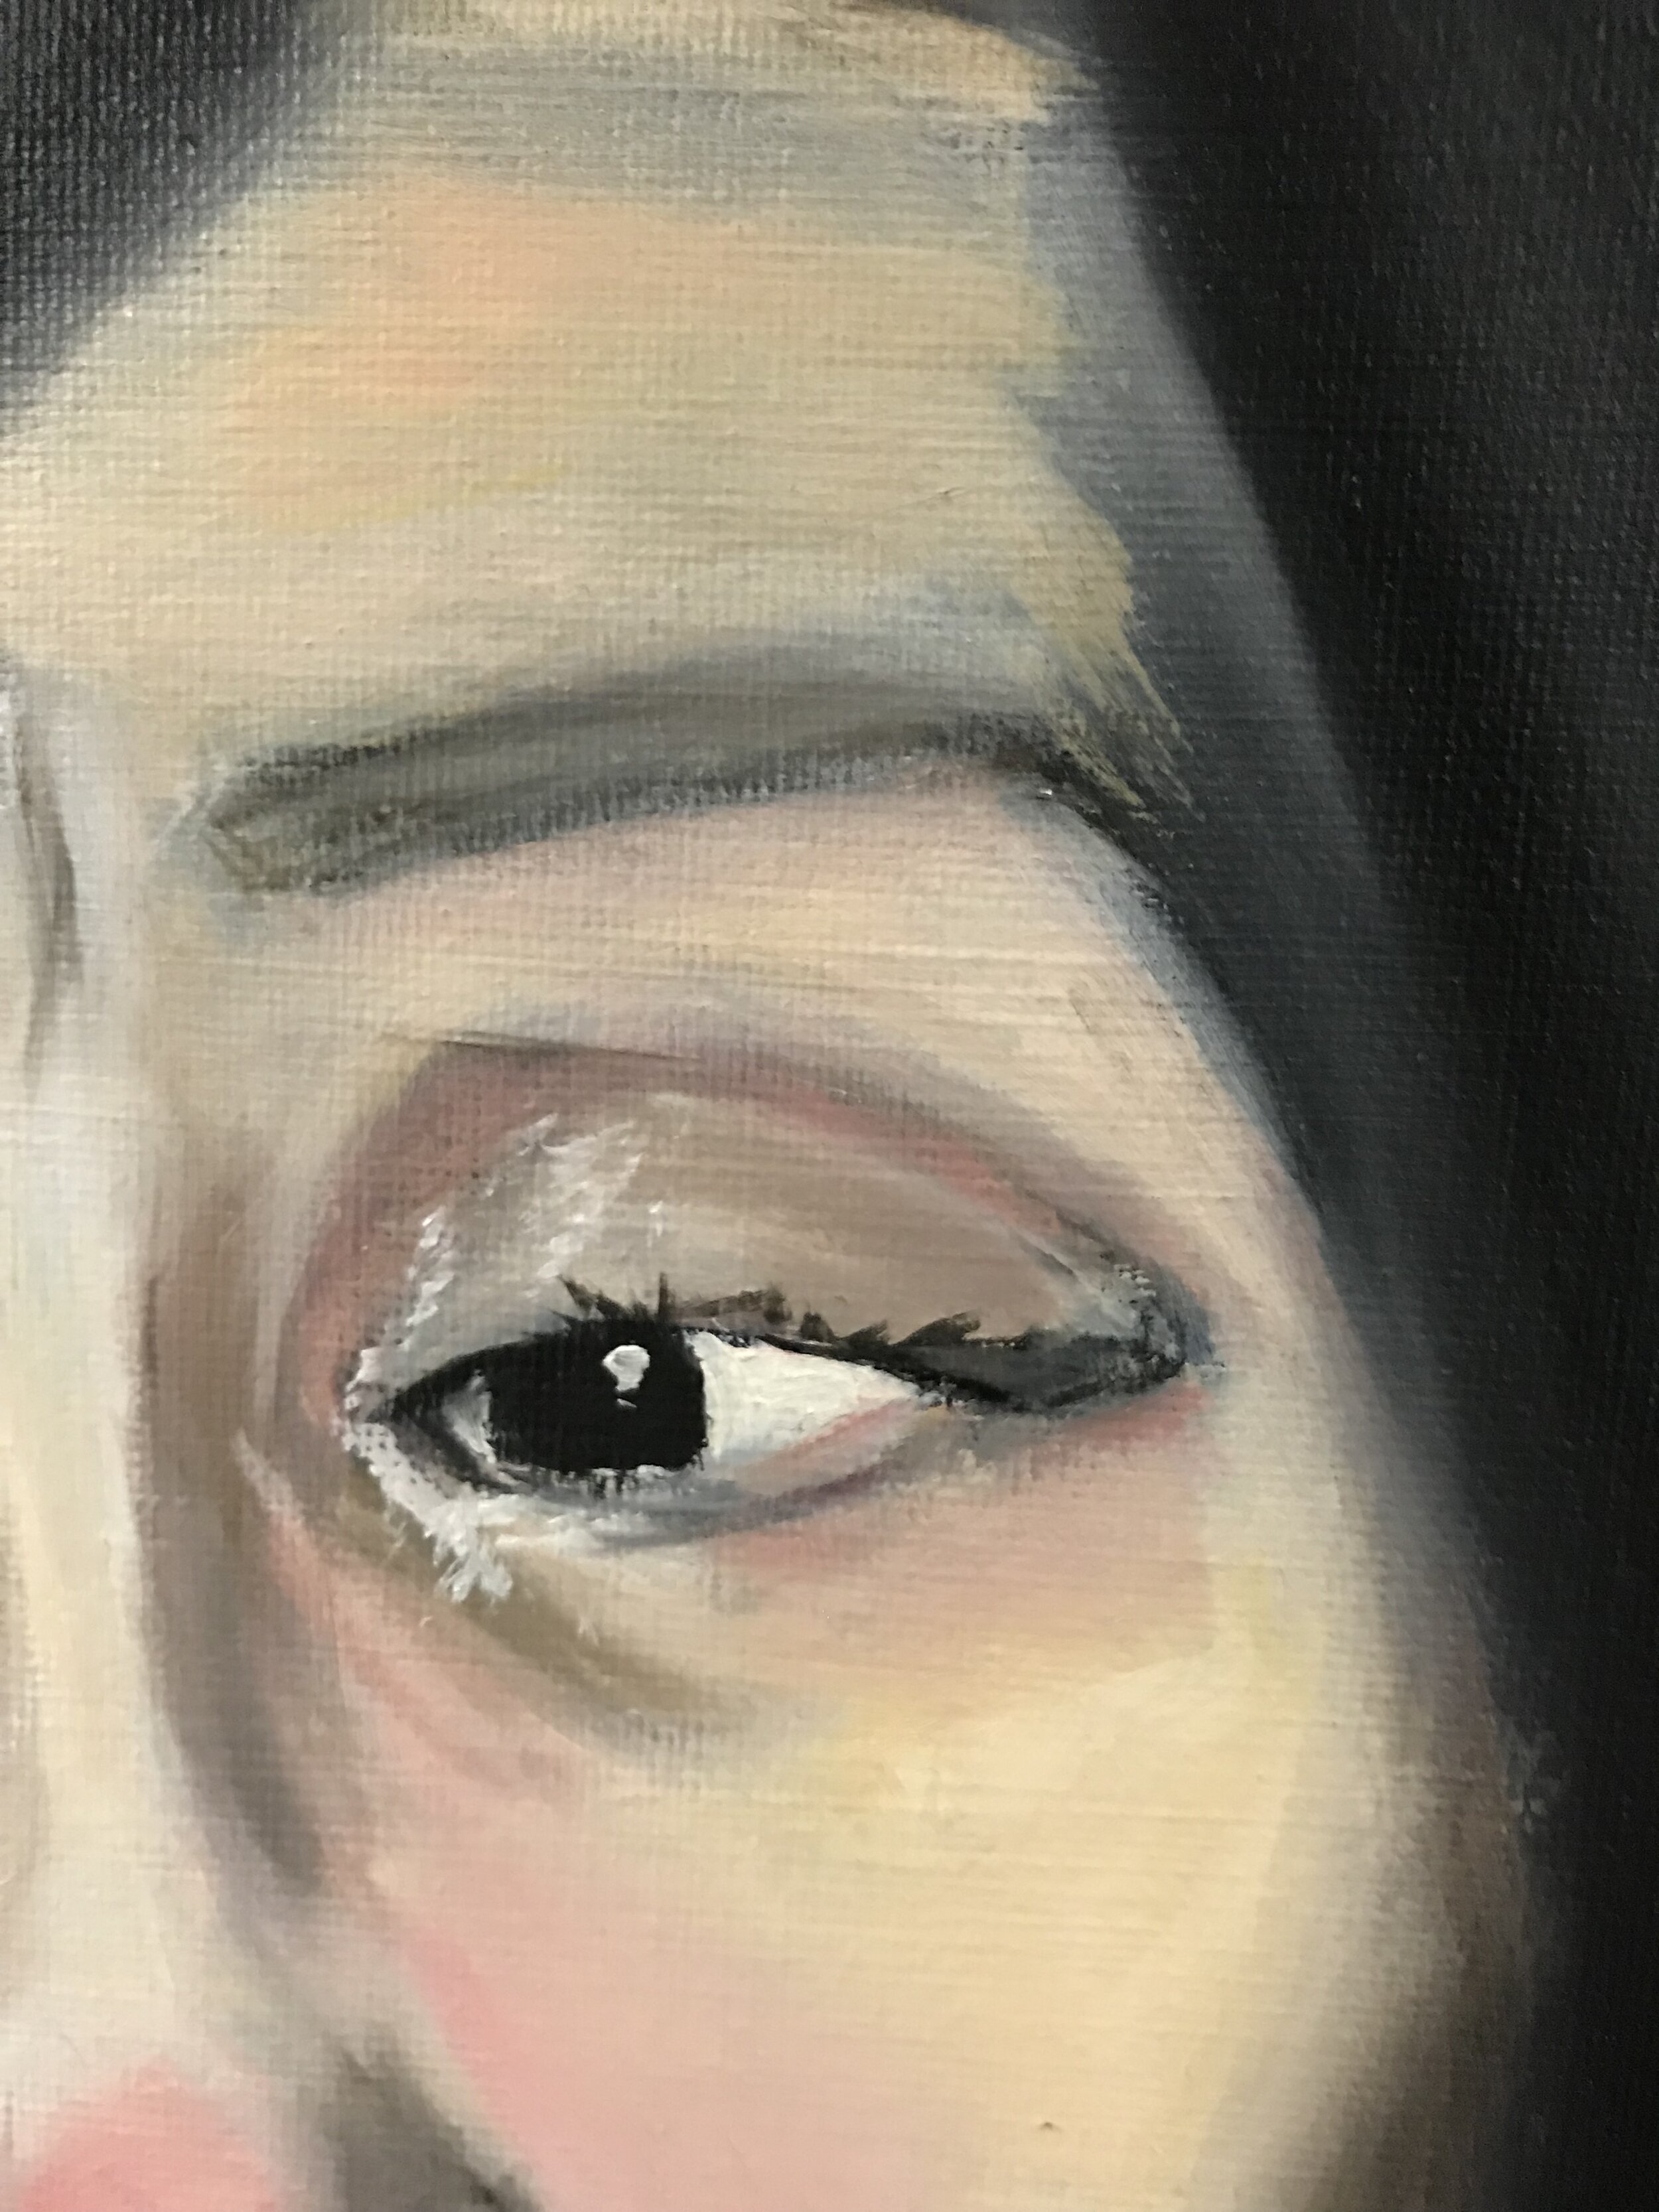 [Detail] “Atausiq” oil on canvas; 18 x 24 in (x3) (2017)